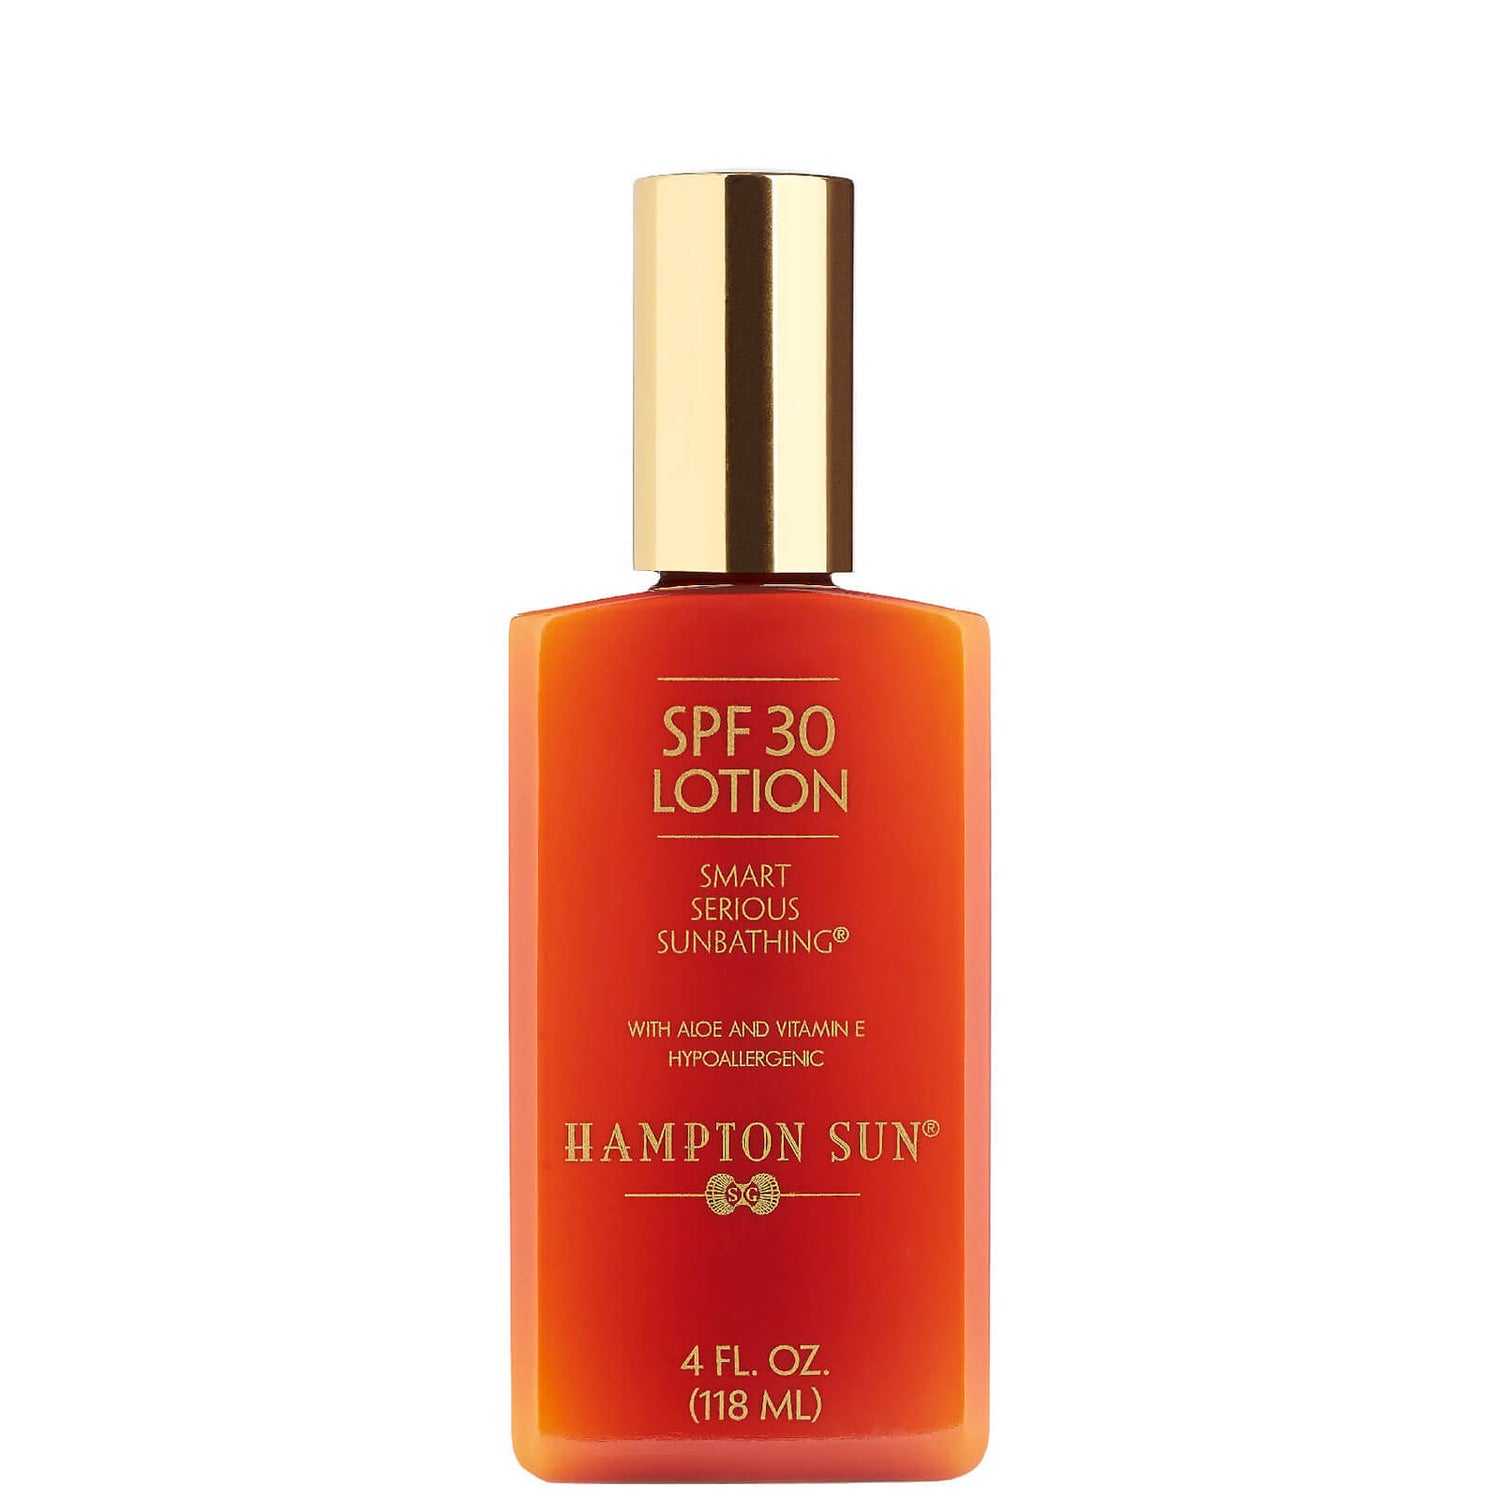 Hampton Sun SPF 30 Tanning Lotion